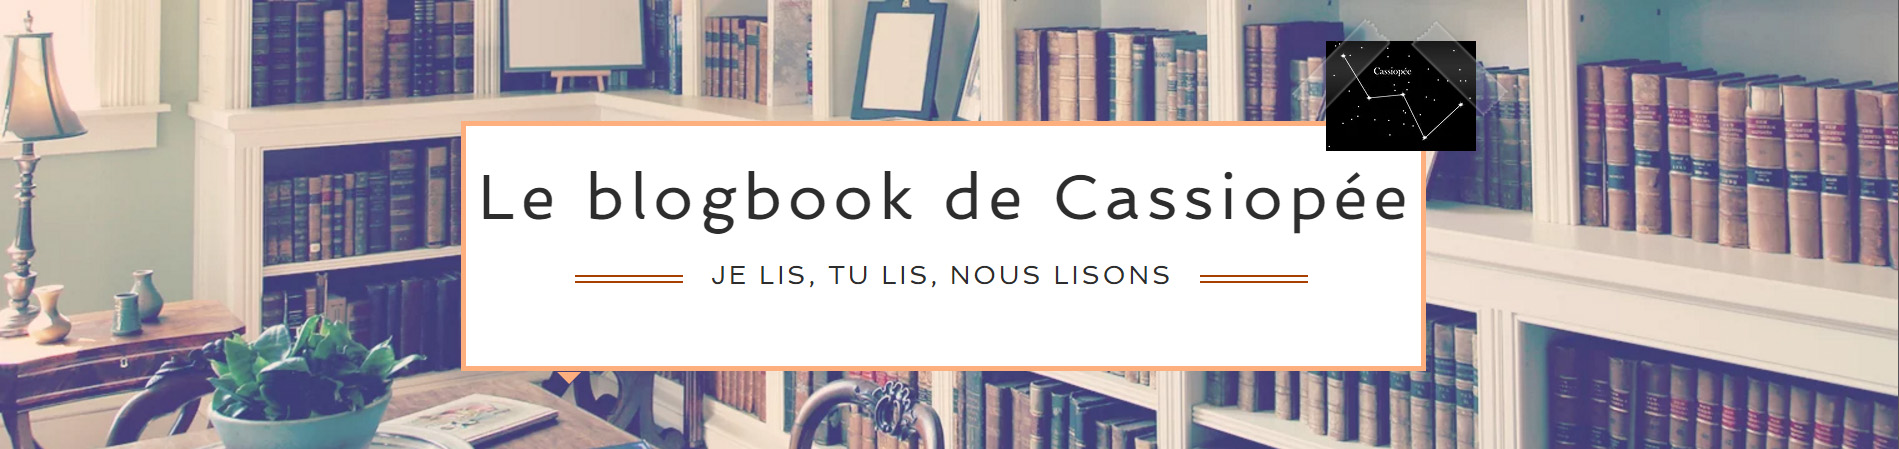 Le blogbook de Cassiopée